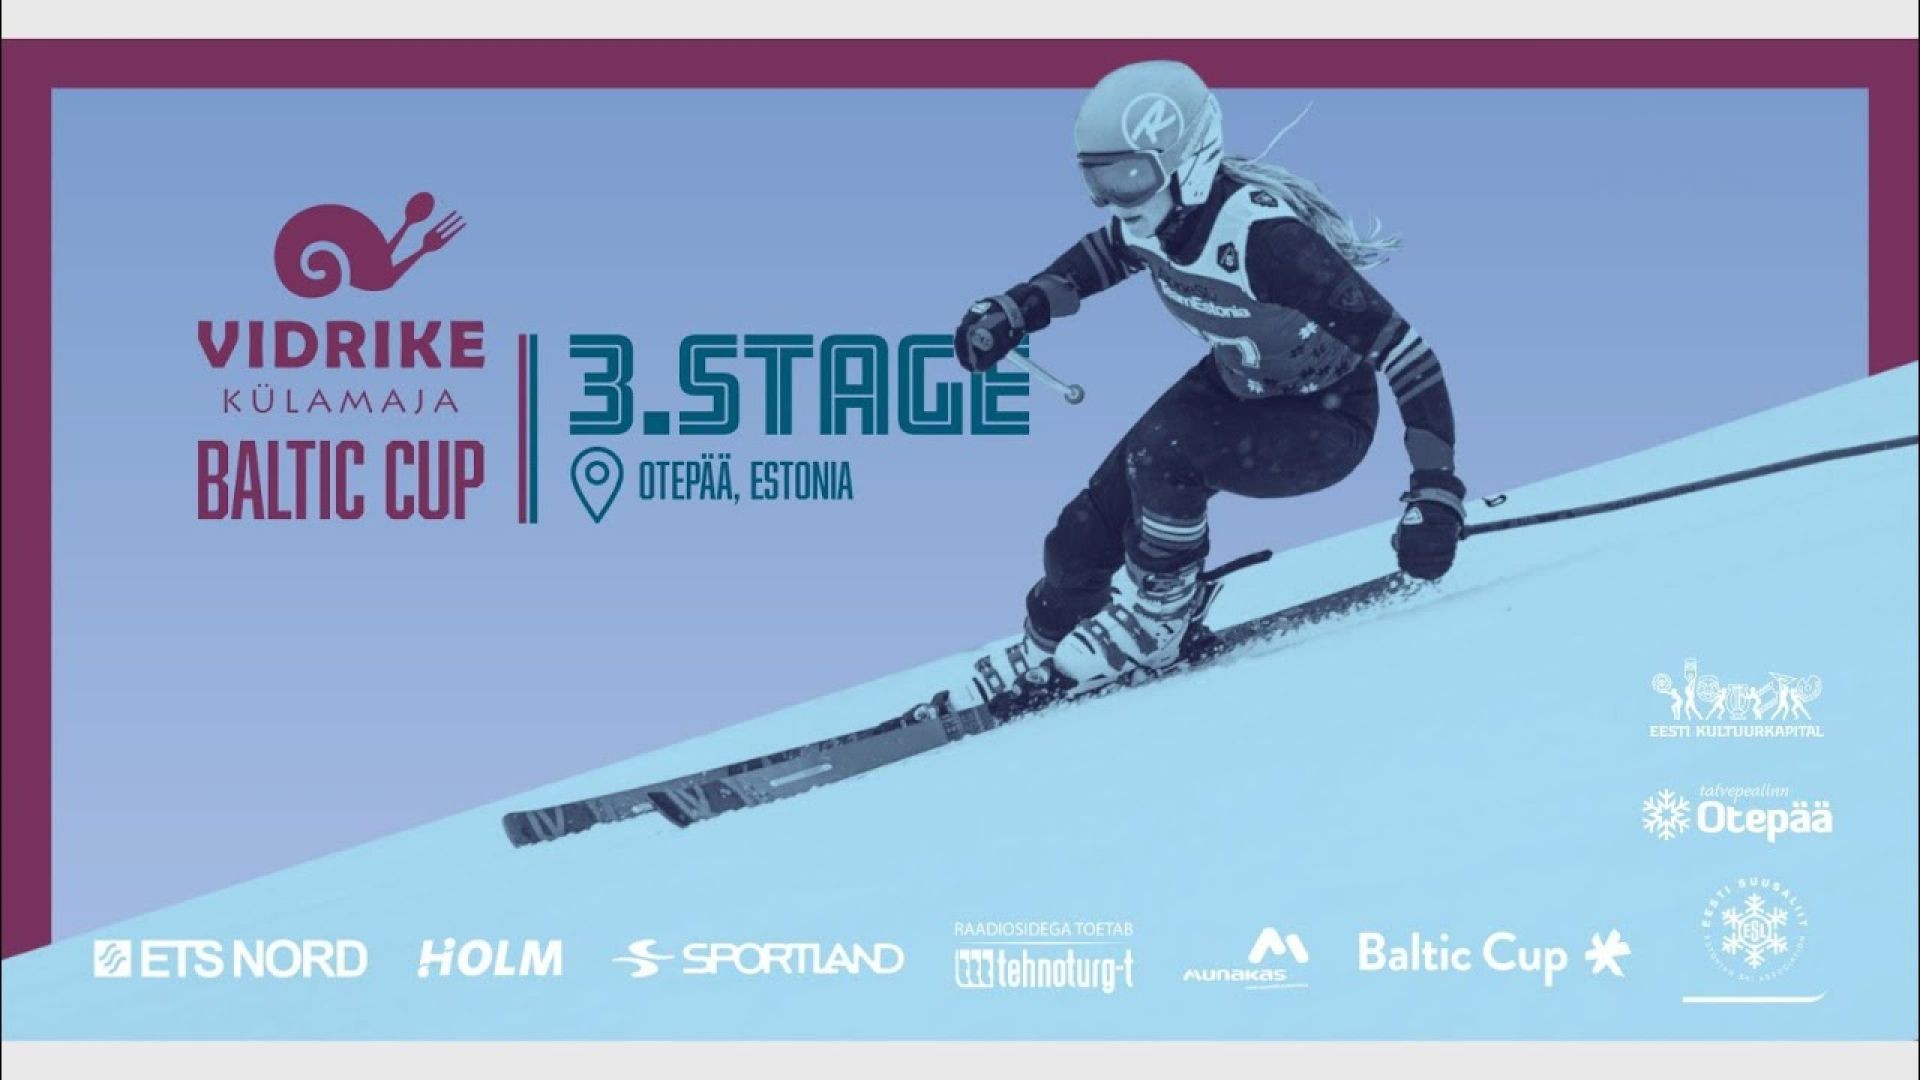 Day 2 |  Baltic Cup 2022 3rd Stage - Otepää, Estonia